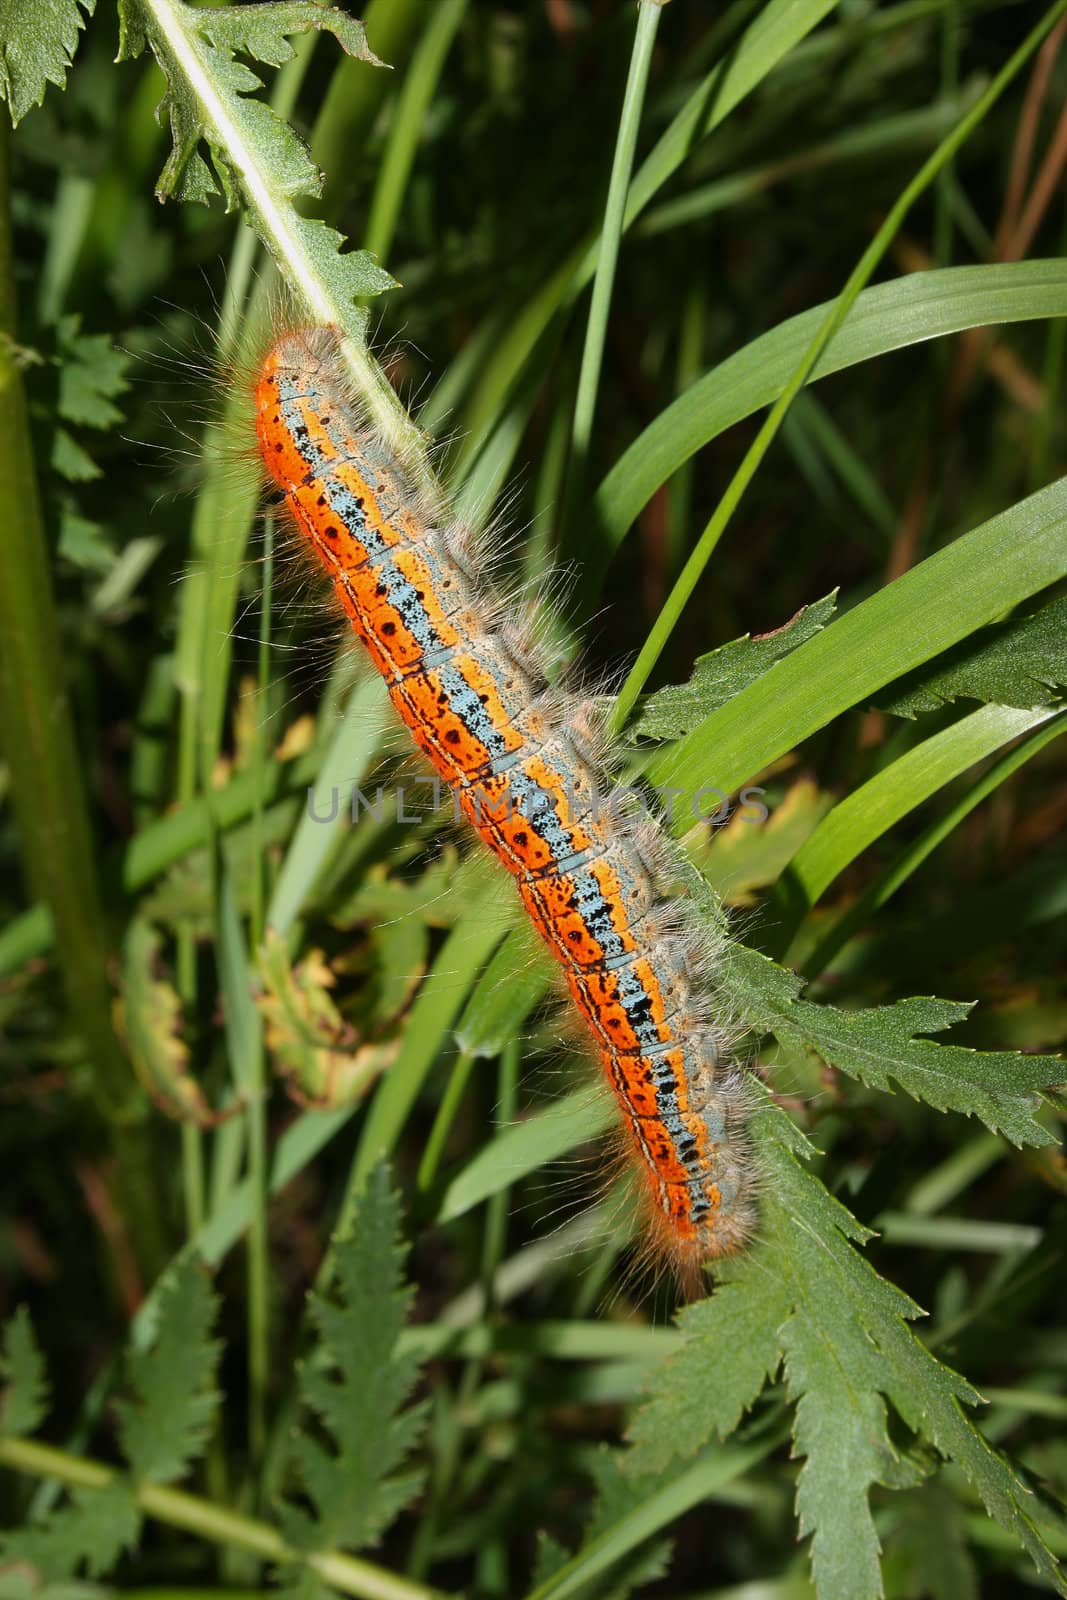 Buff-tip (Phalera bucephala) - Caterpillar by tdietrich